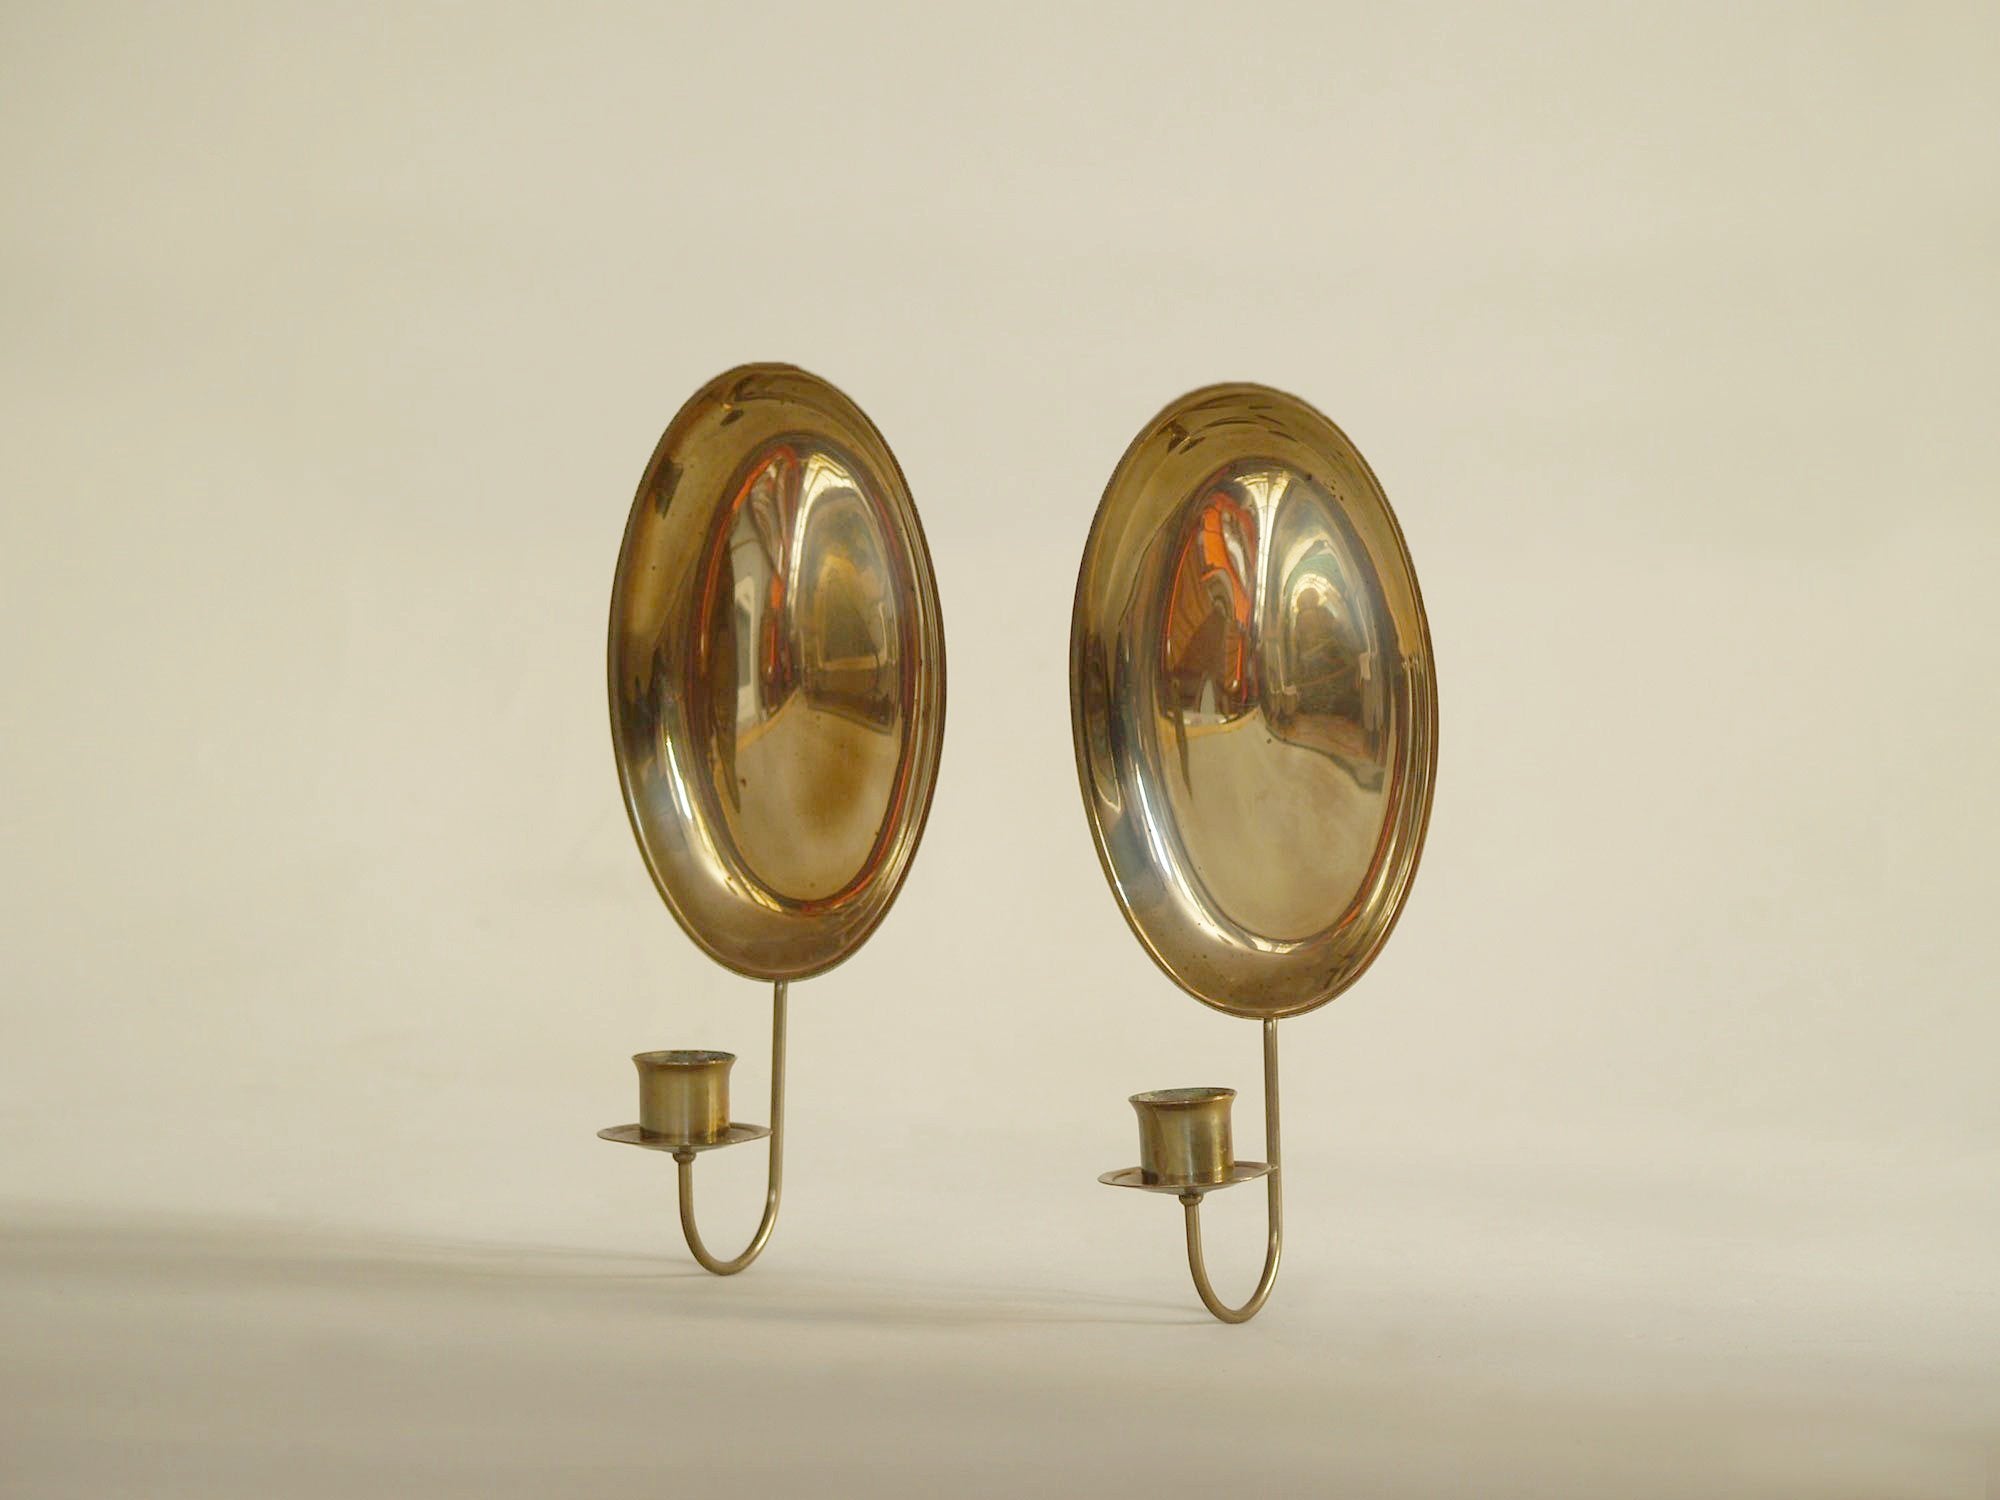 Paire de miroirs d’applique gustavien en laiton, Suède (vers 1900)..Pair of gustavian folk brass wall hanging candle holders, Sweden (circa 1900)